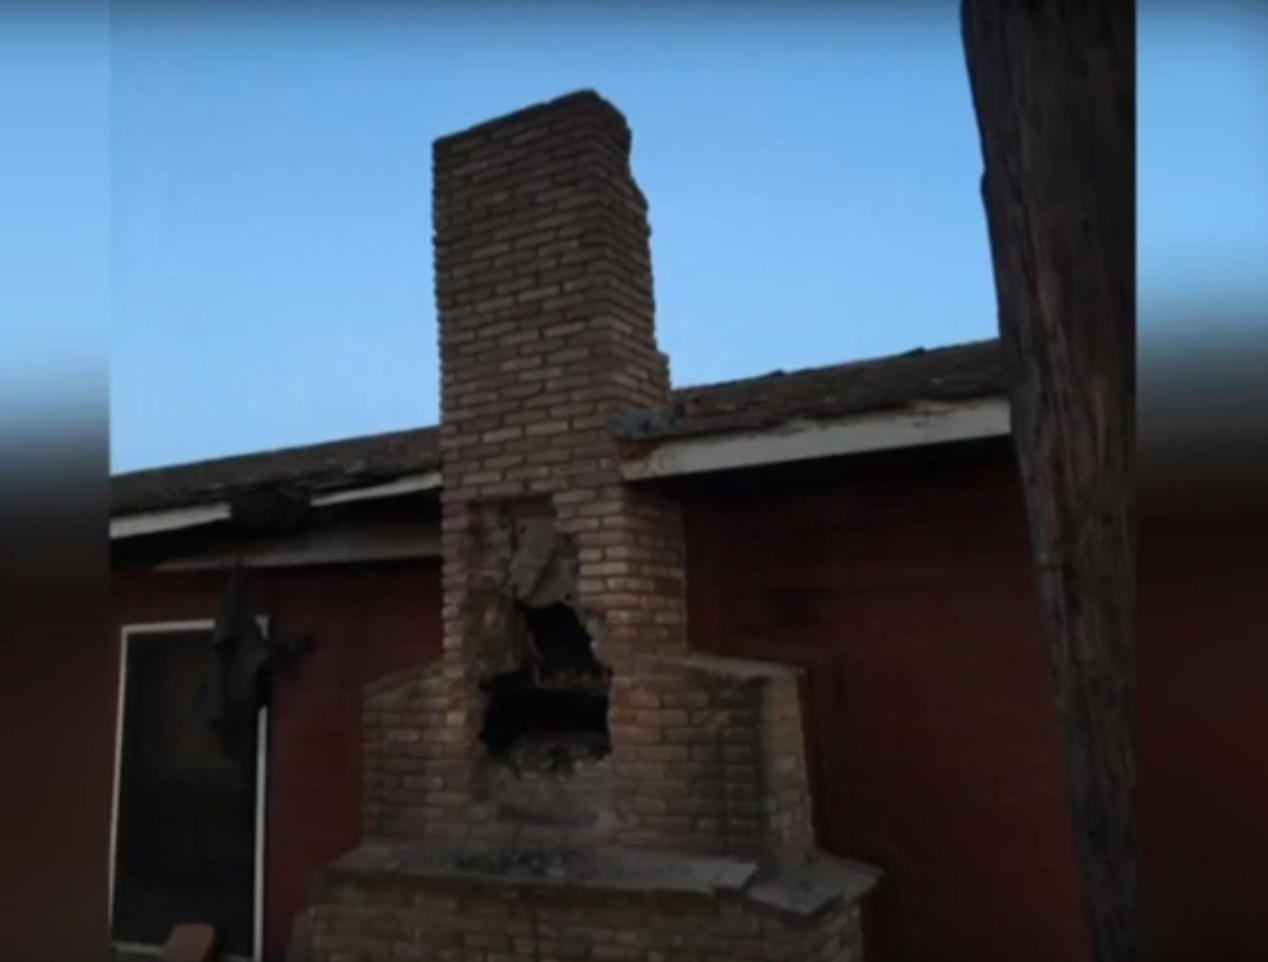 Burglar stuck in chimney dies after unsuspecting homeowner lights fireplace